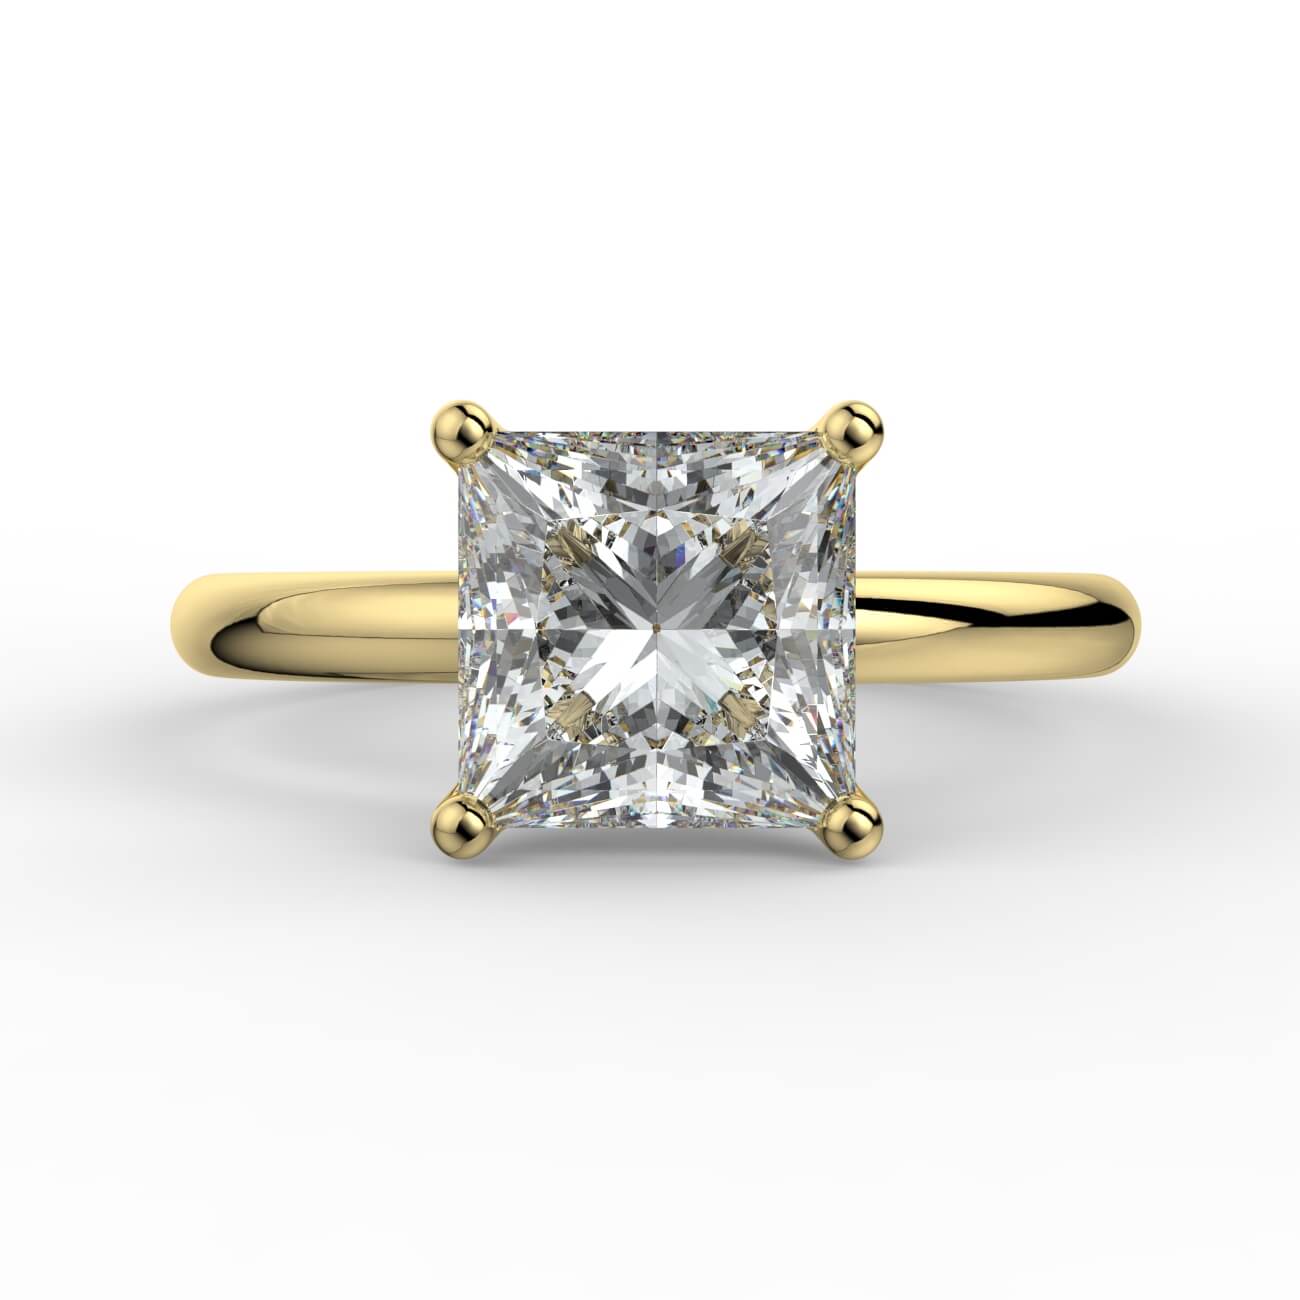 Solitaire princess cut diamond engagement ring in yellow gold – Australian Diamond Network